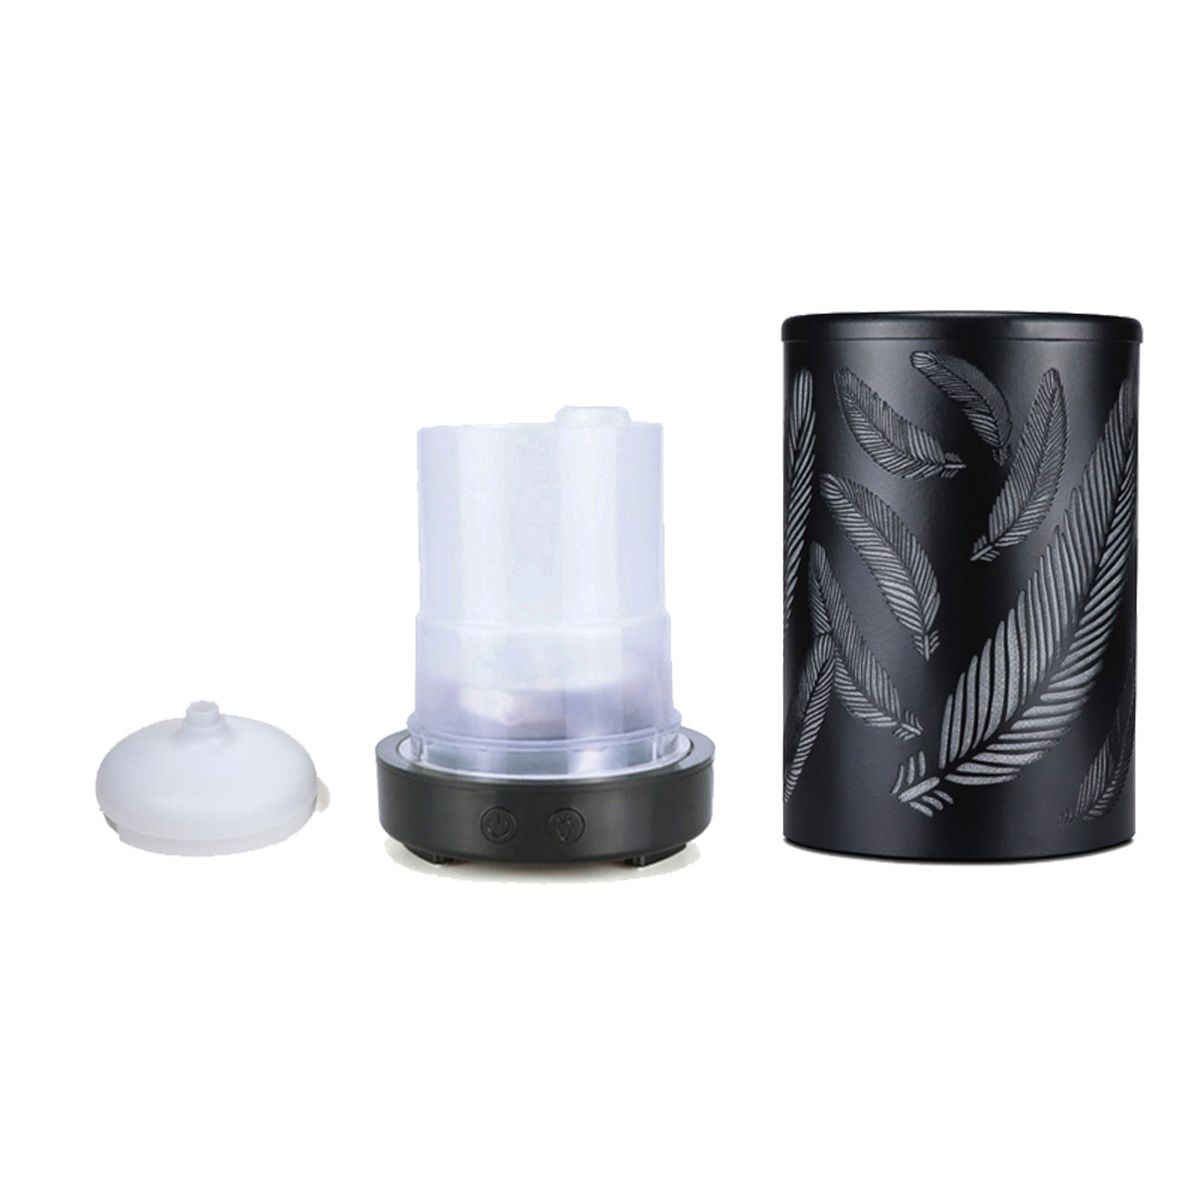 Ultrasonic aroma diffuser Zen Feathers